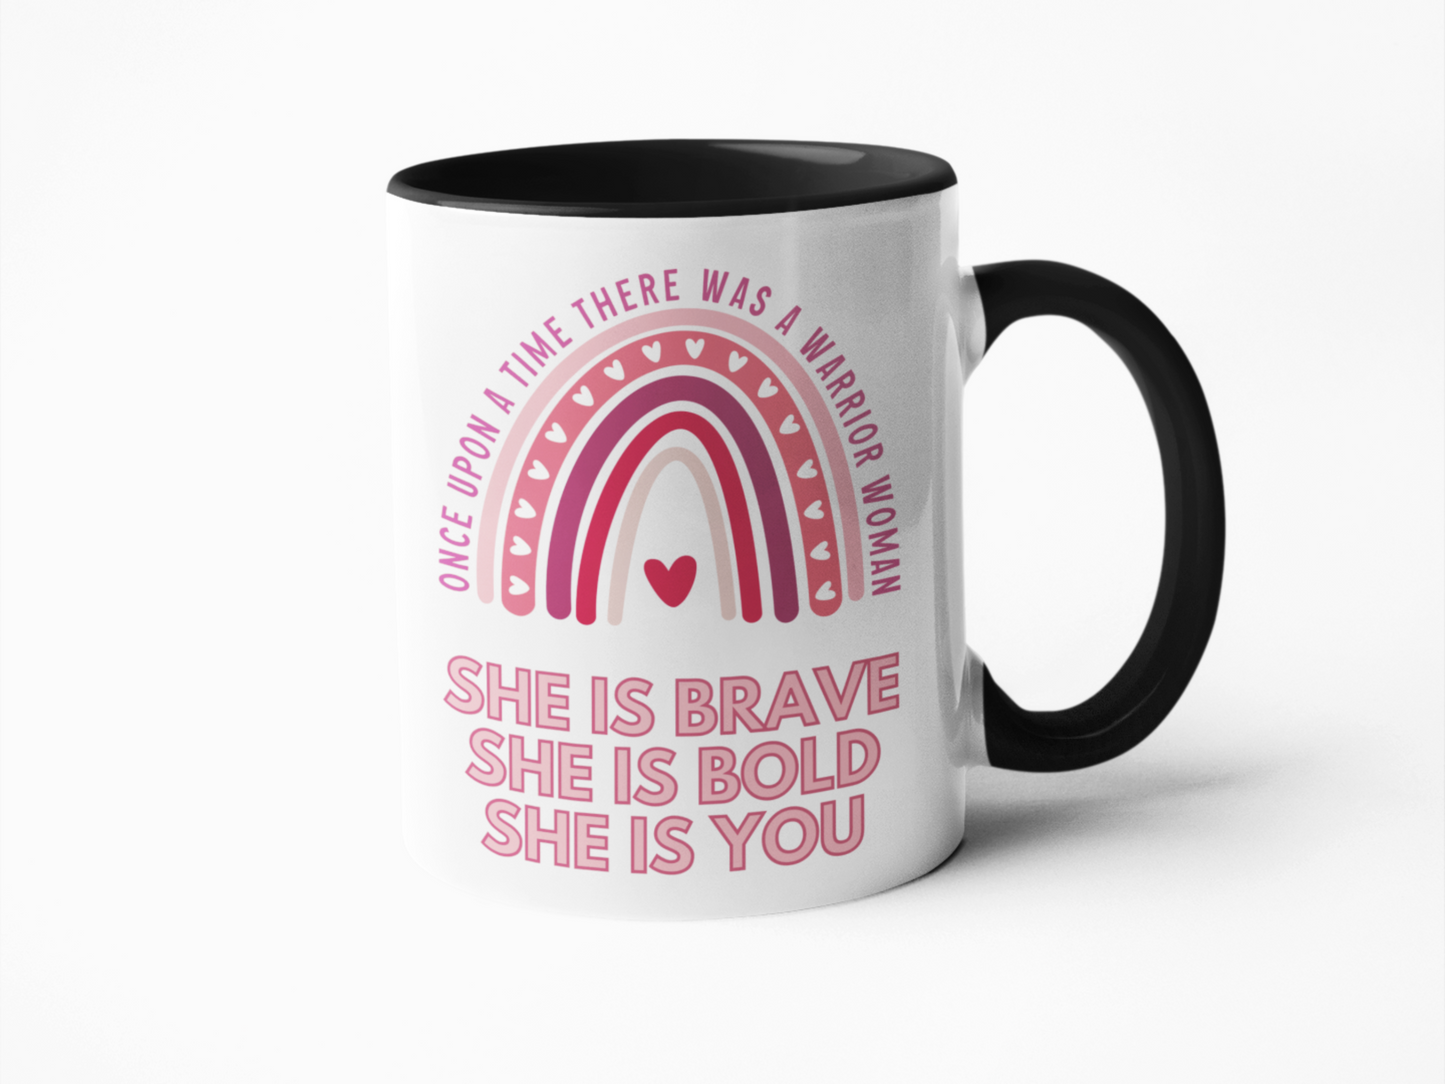 Warrior woman coffee mug